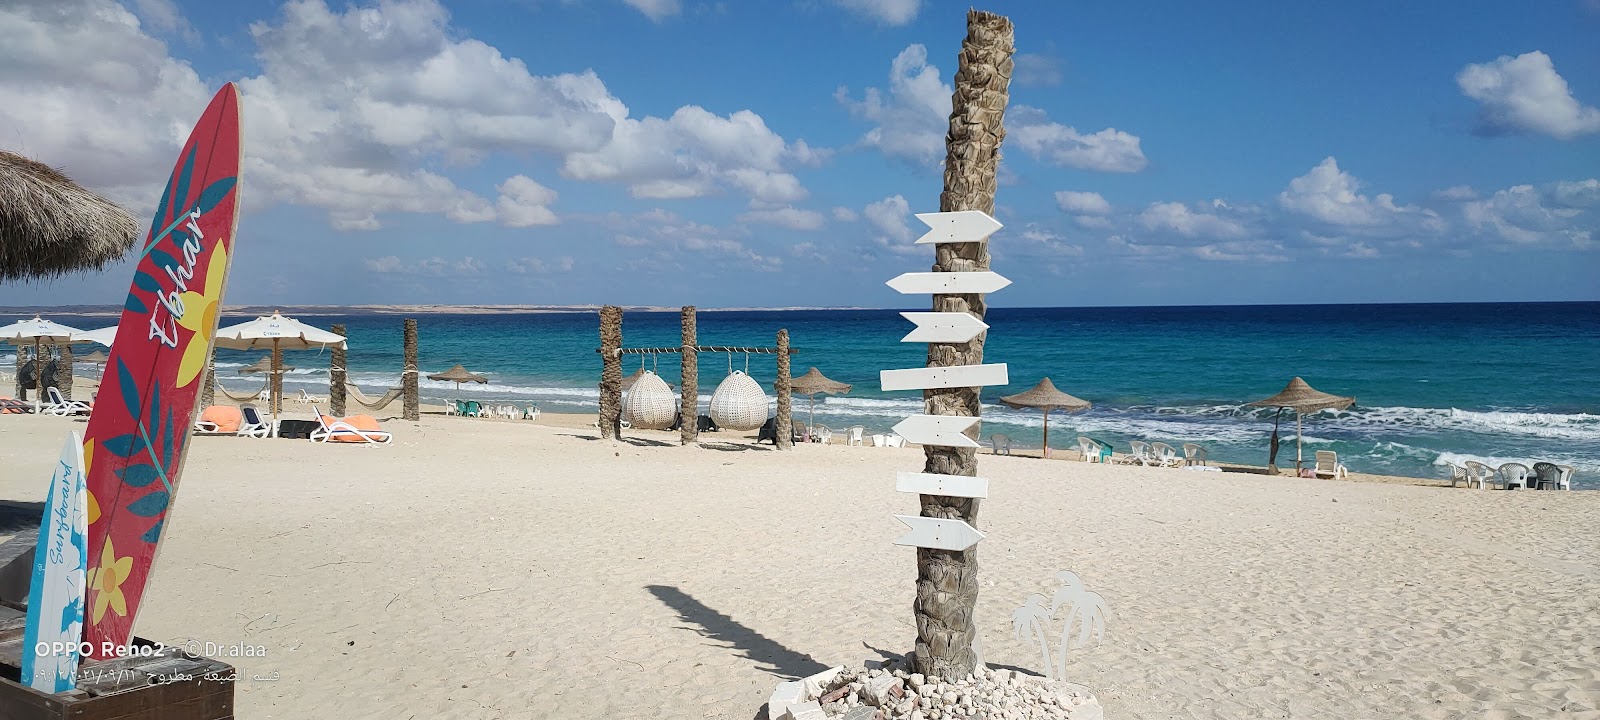 Foto di Al Rawan Resort Beach con una superficie del sabbia luminosa